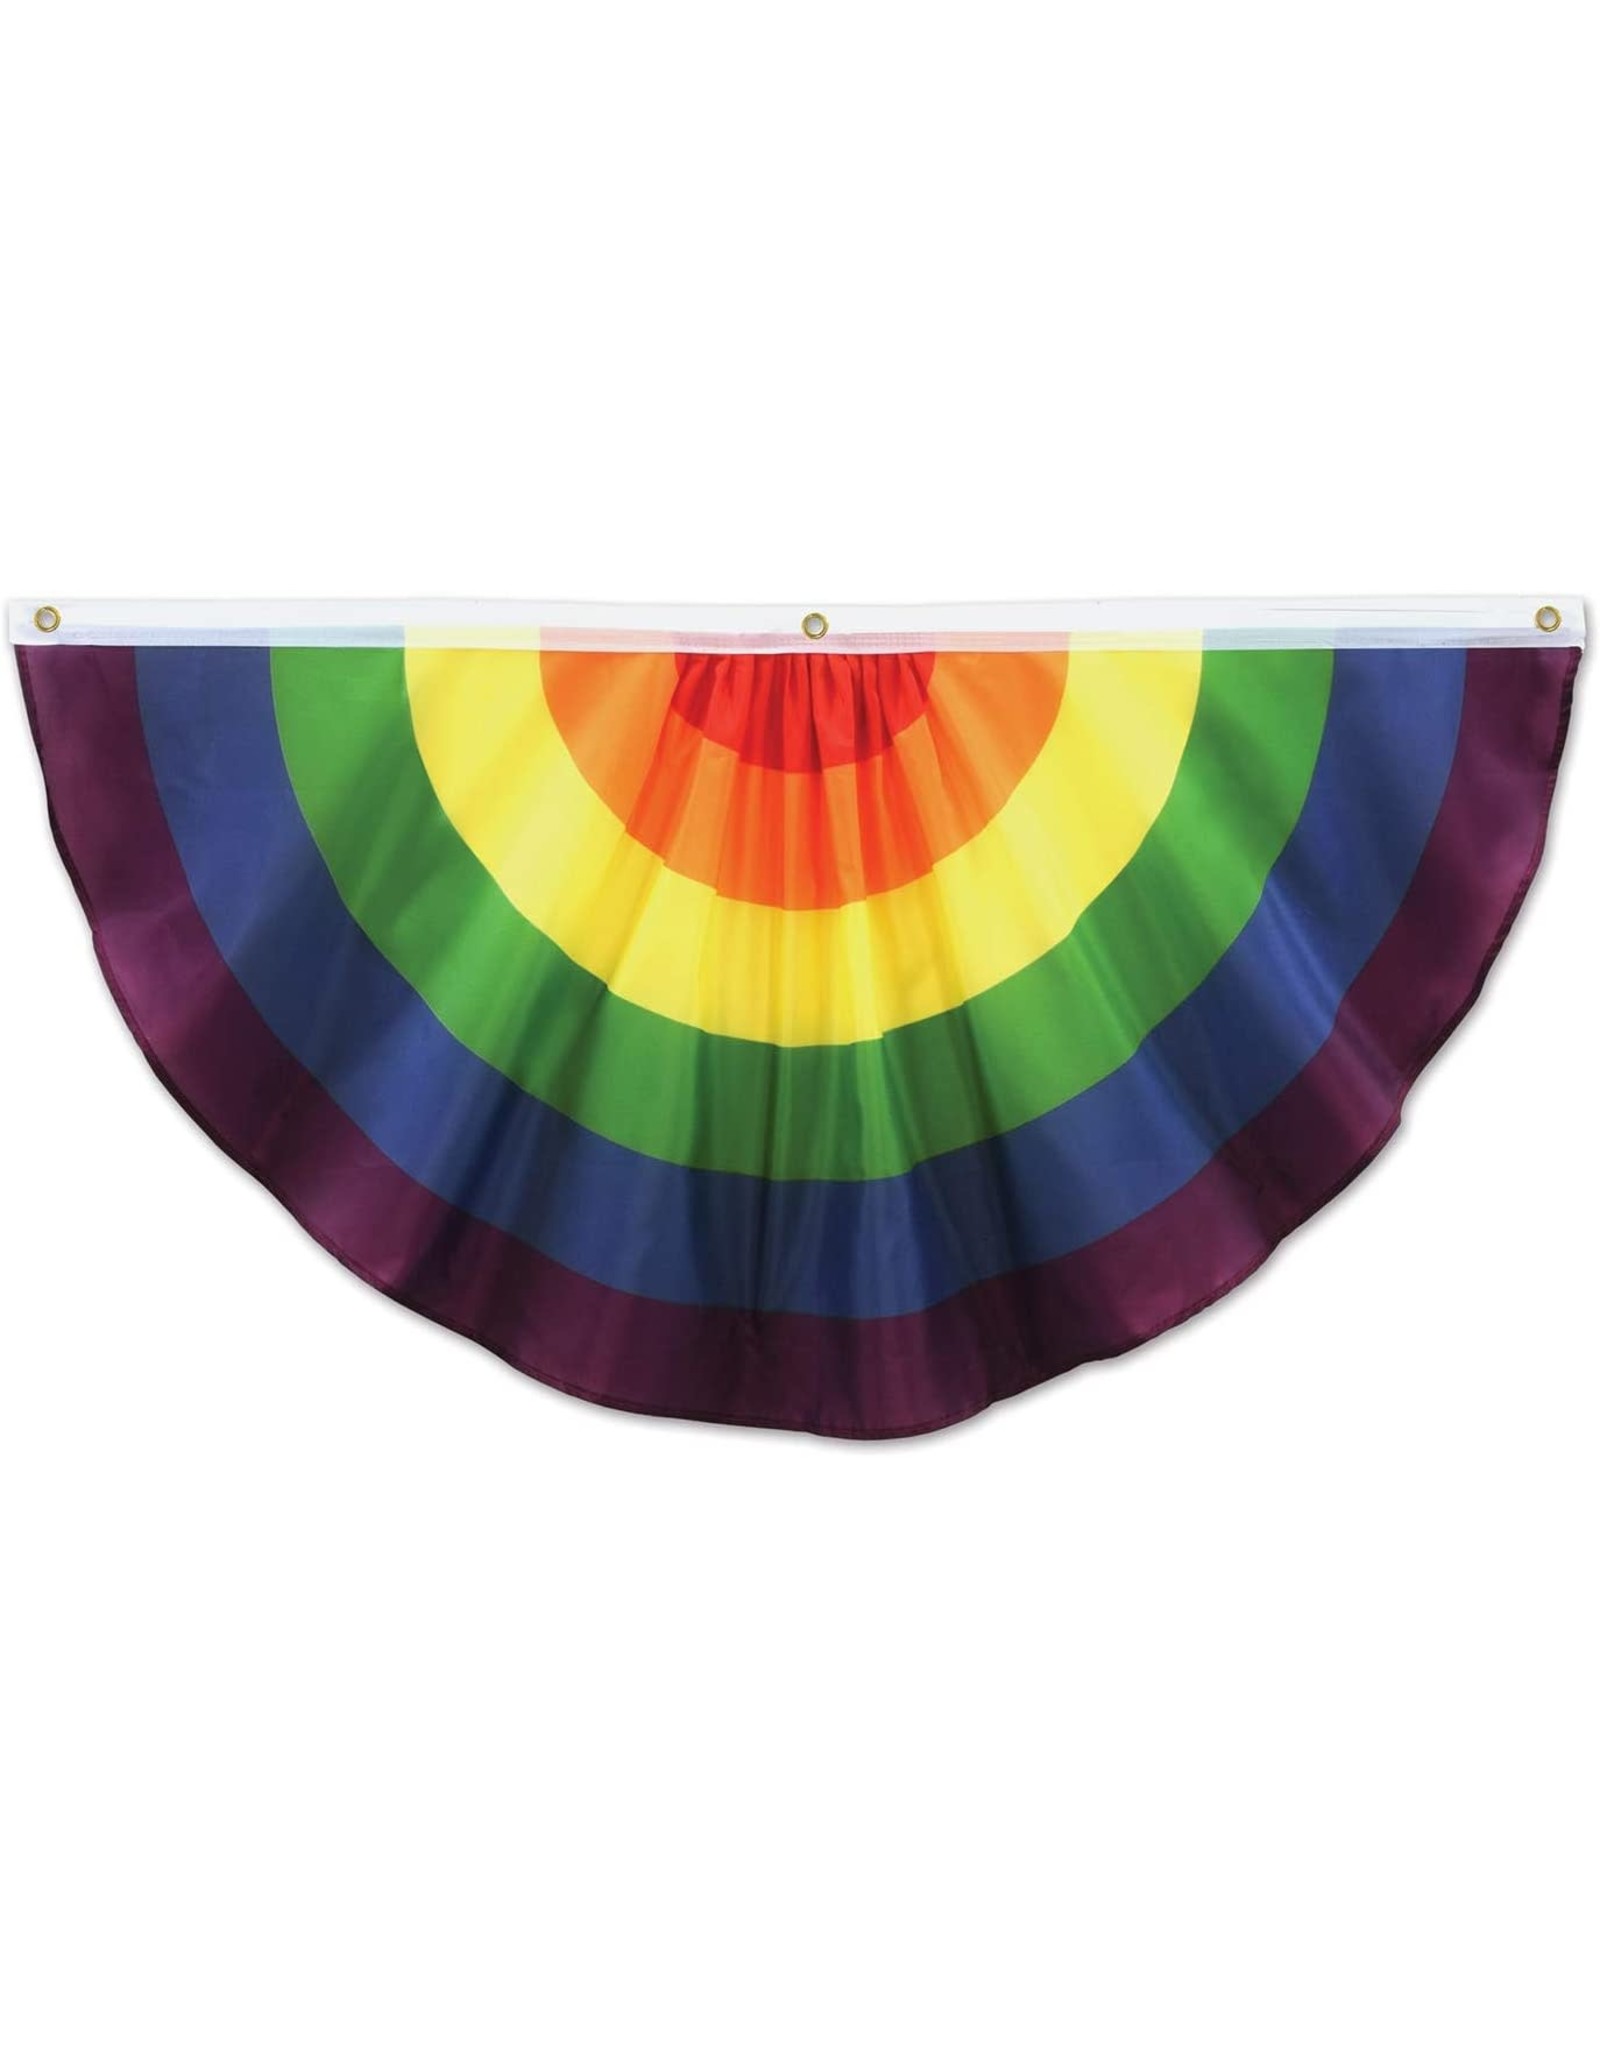 Beistle Rainbow Fabric Bunting 4x2 Feet